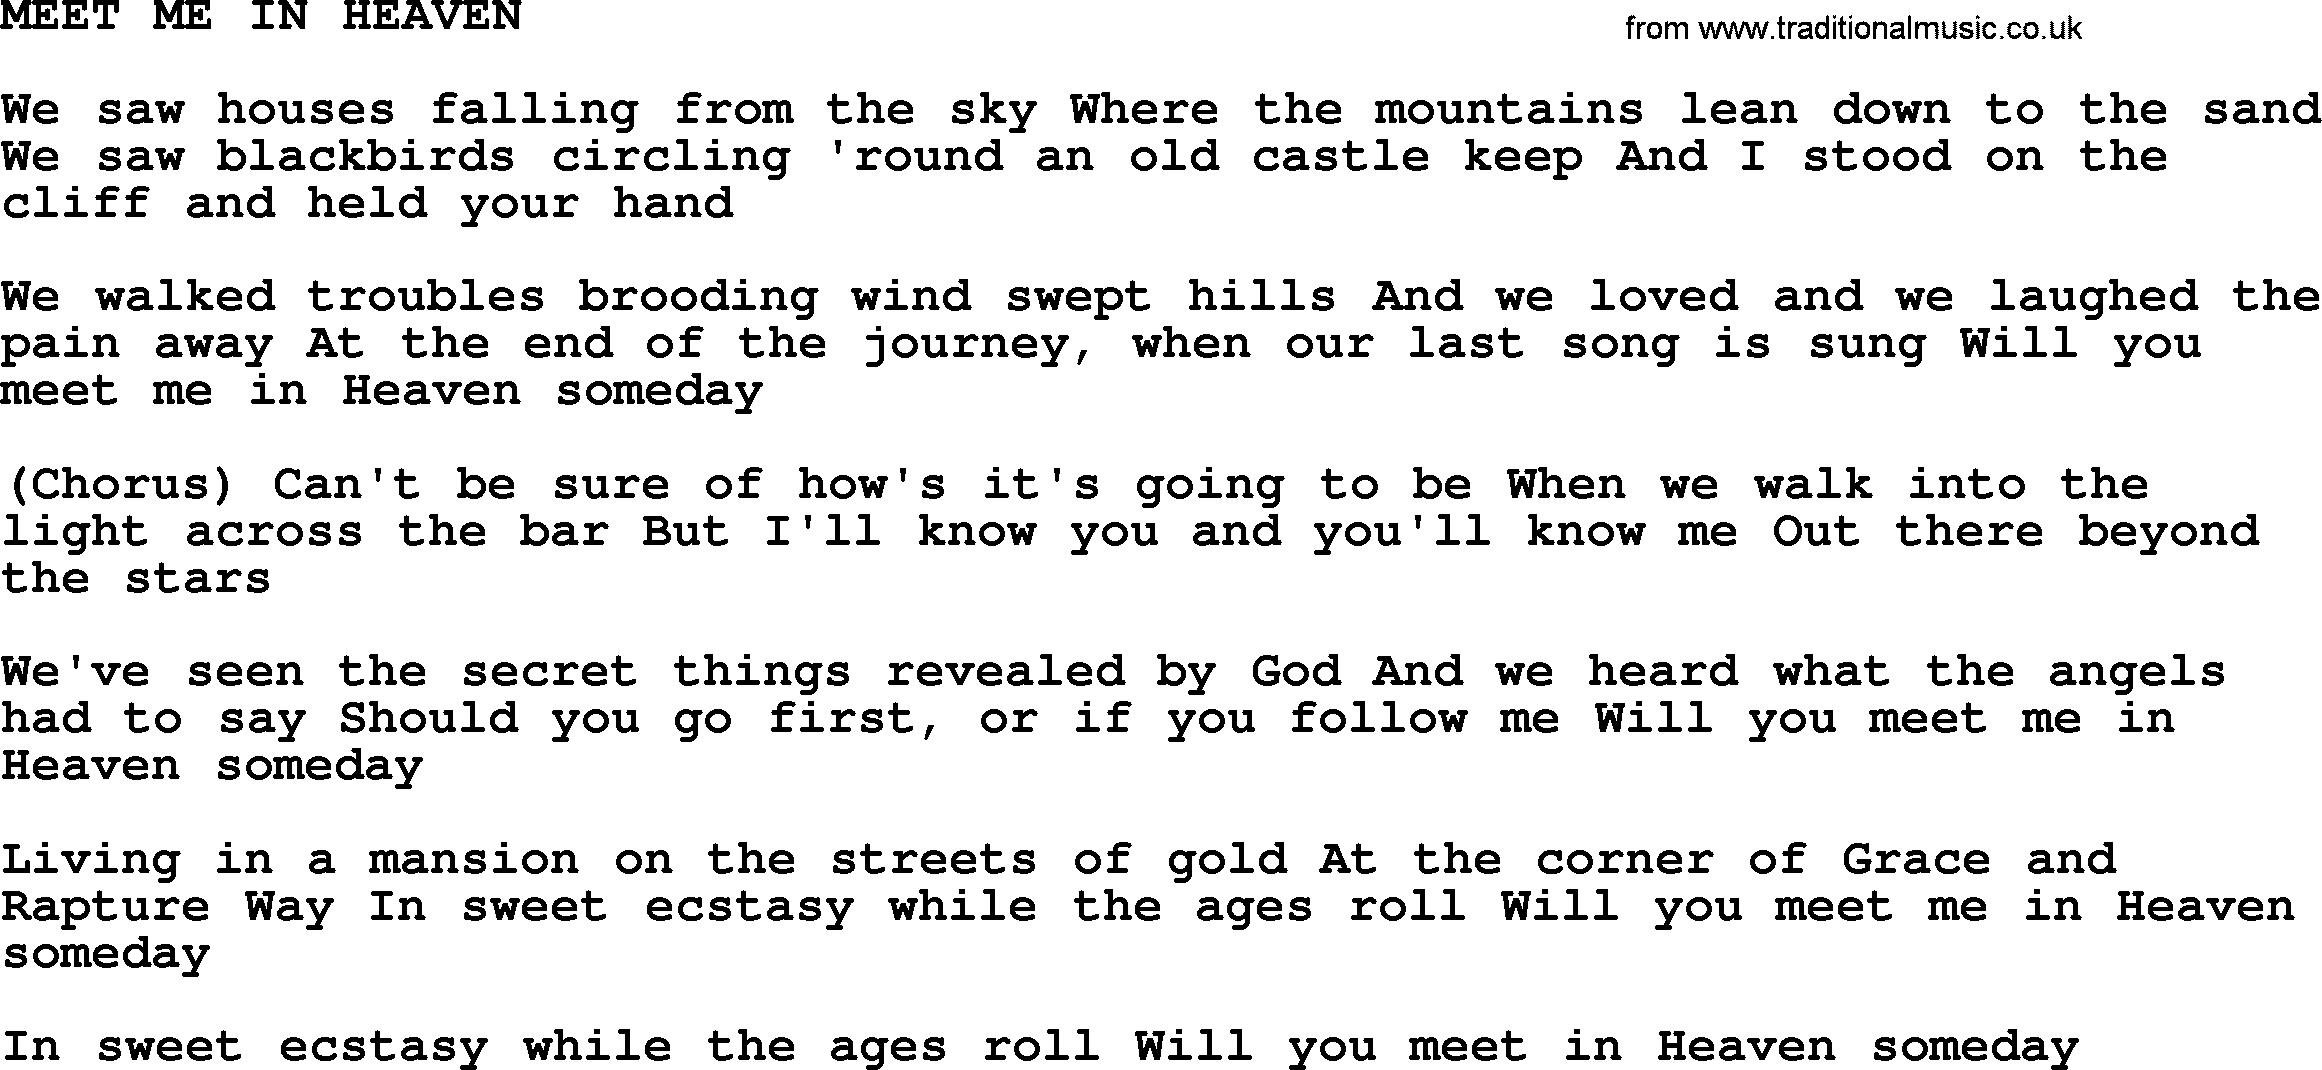 Johnny Cash song Meet Me In Heaven.txt lyrics